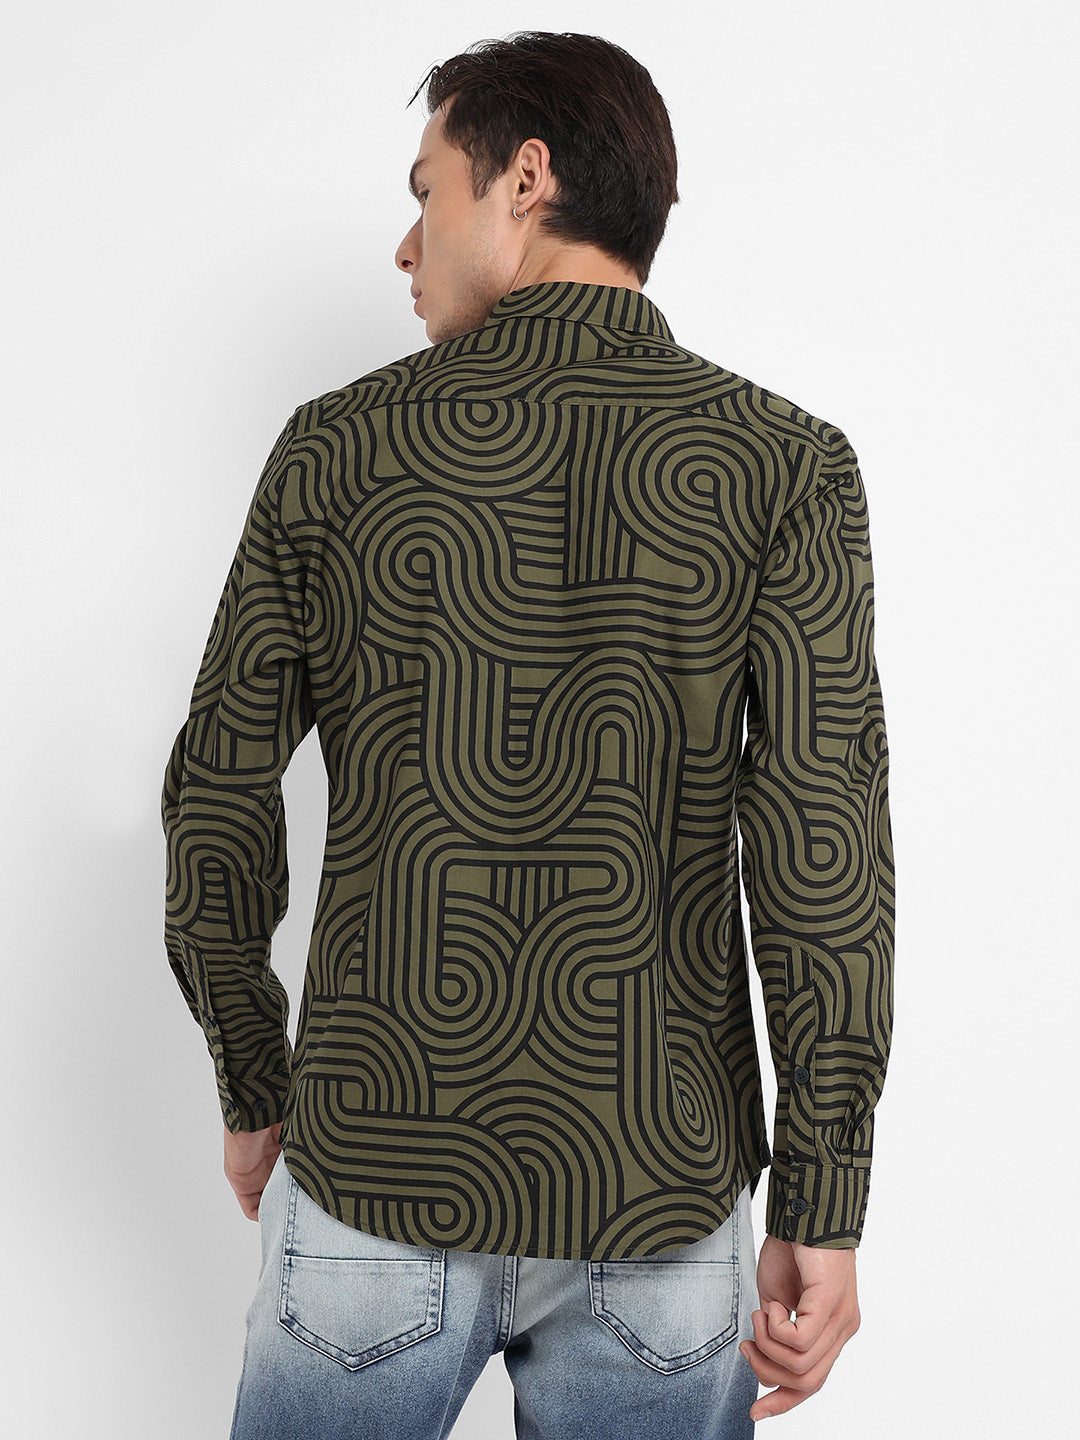 Parallel Swirl Shirt